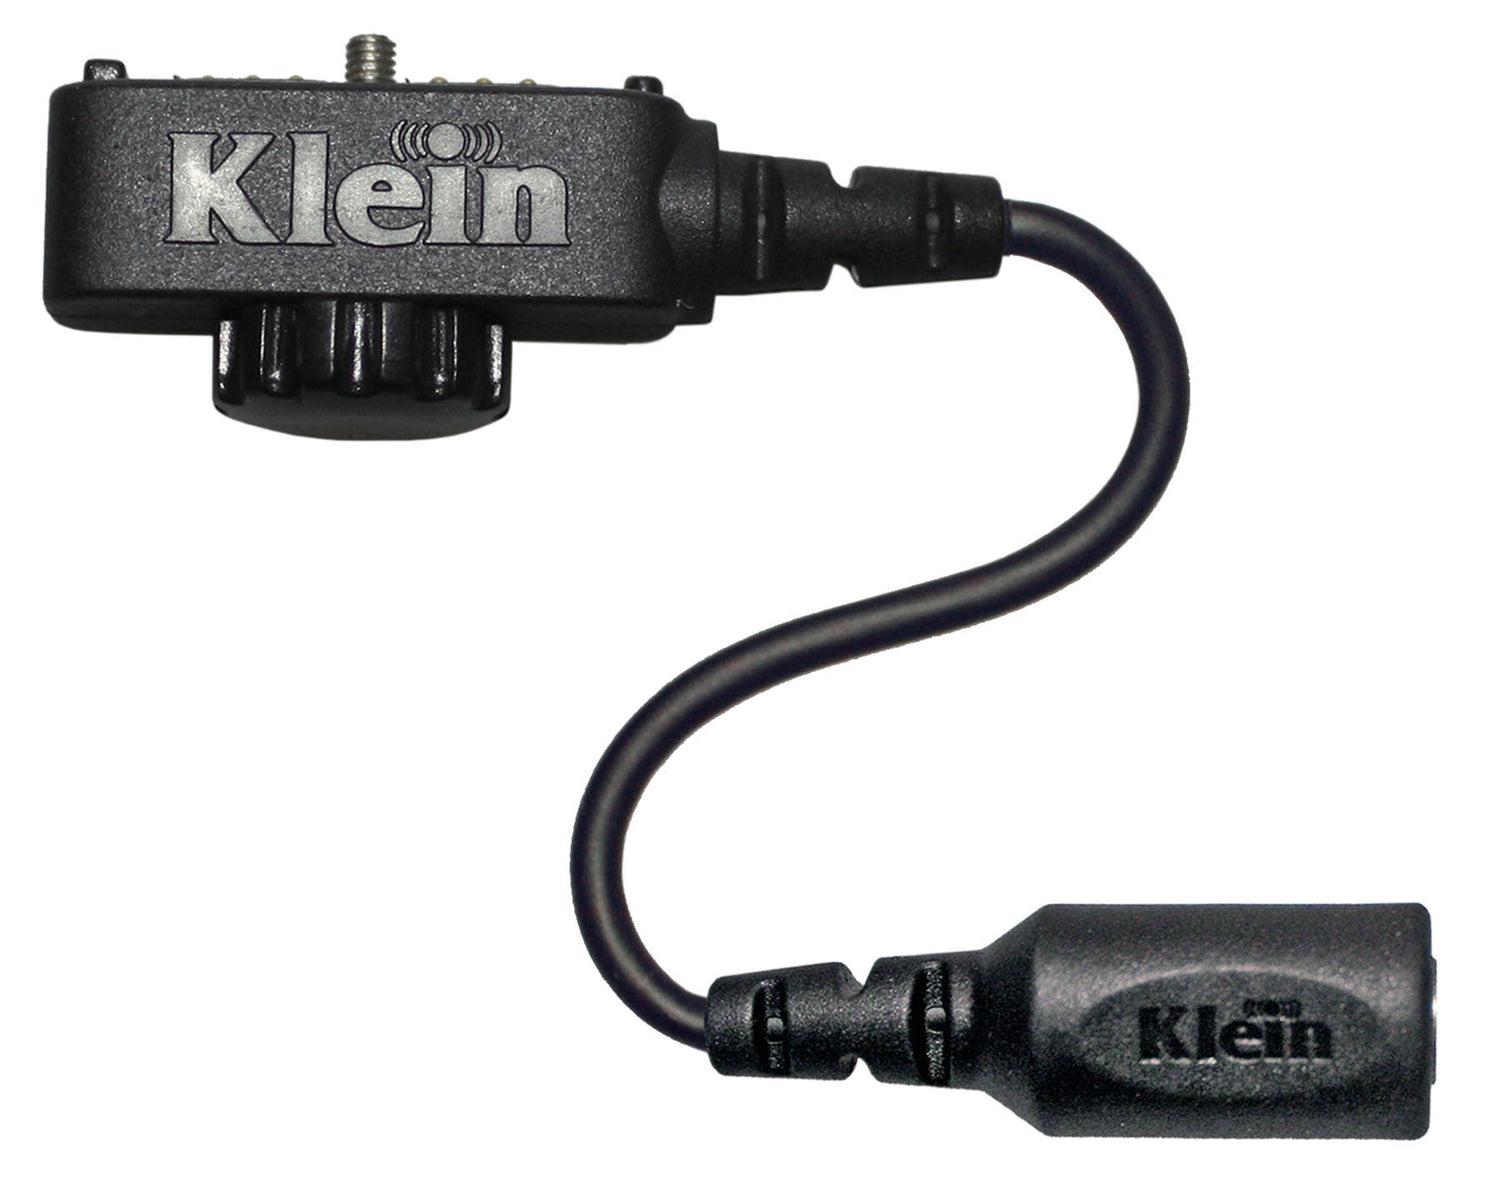 Hama Adapter-Kasette für Auto-Radio AUX 3,5mm Auto-Adapter 3,5-mm-Klinke,  Kasetten-Adapter Tape universal für Handy MP3 MP4 CD MD